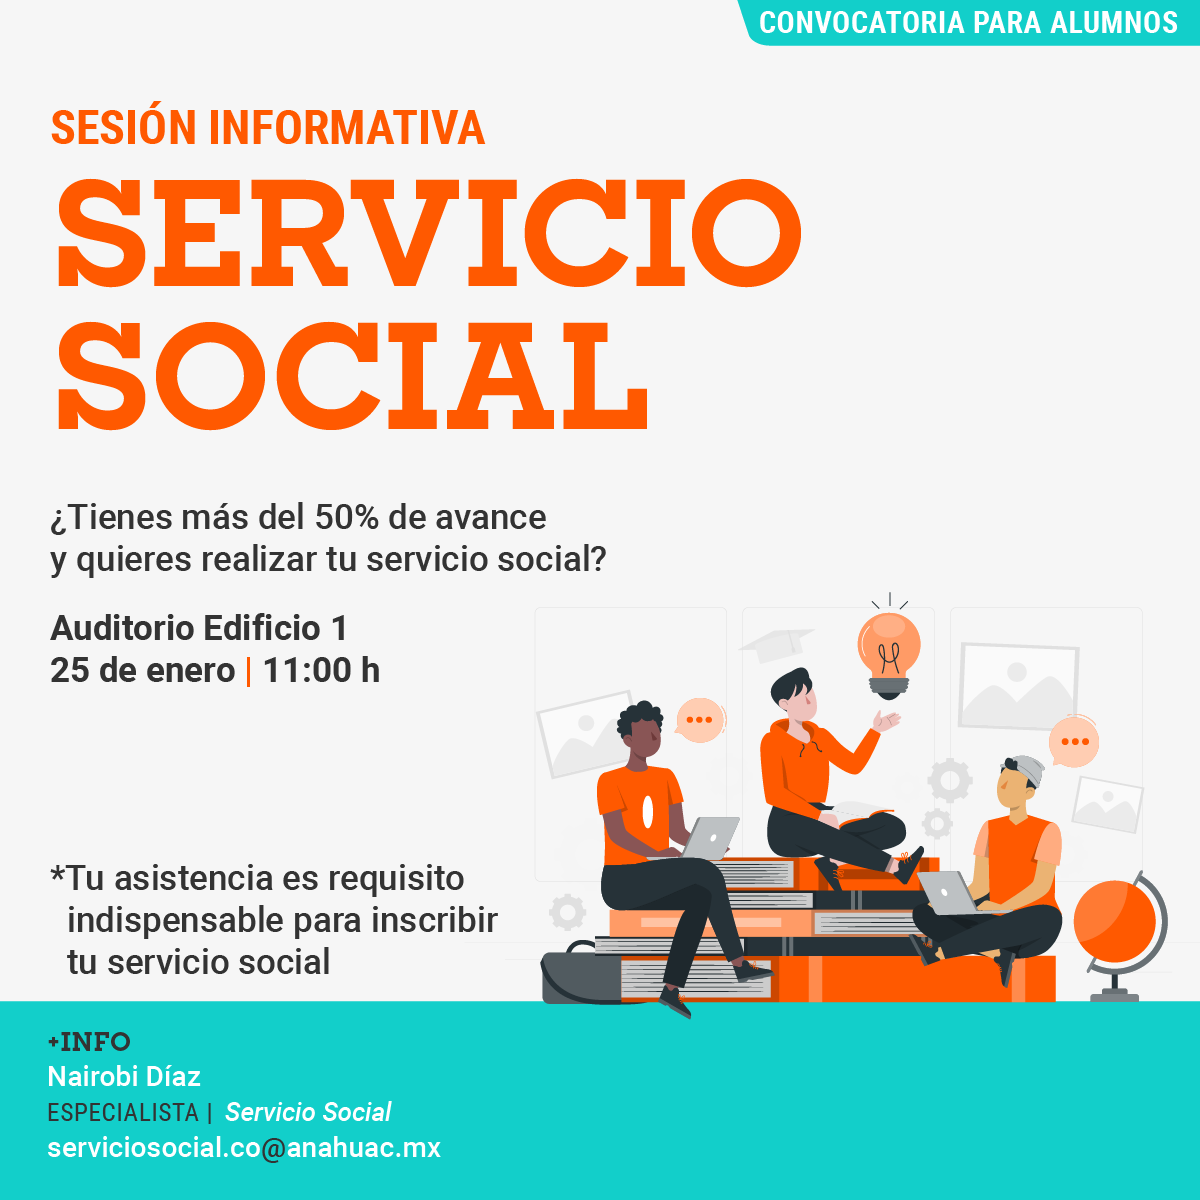 Servicio Social: Convocatoria para Alumnos